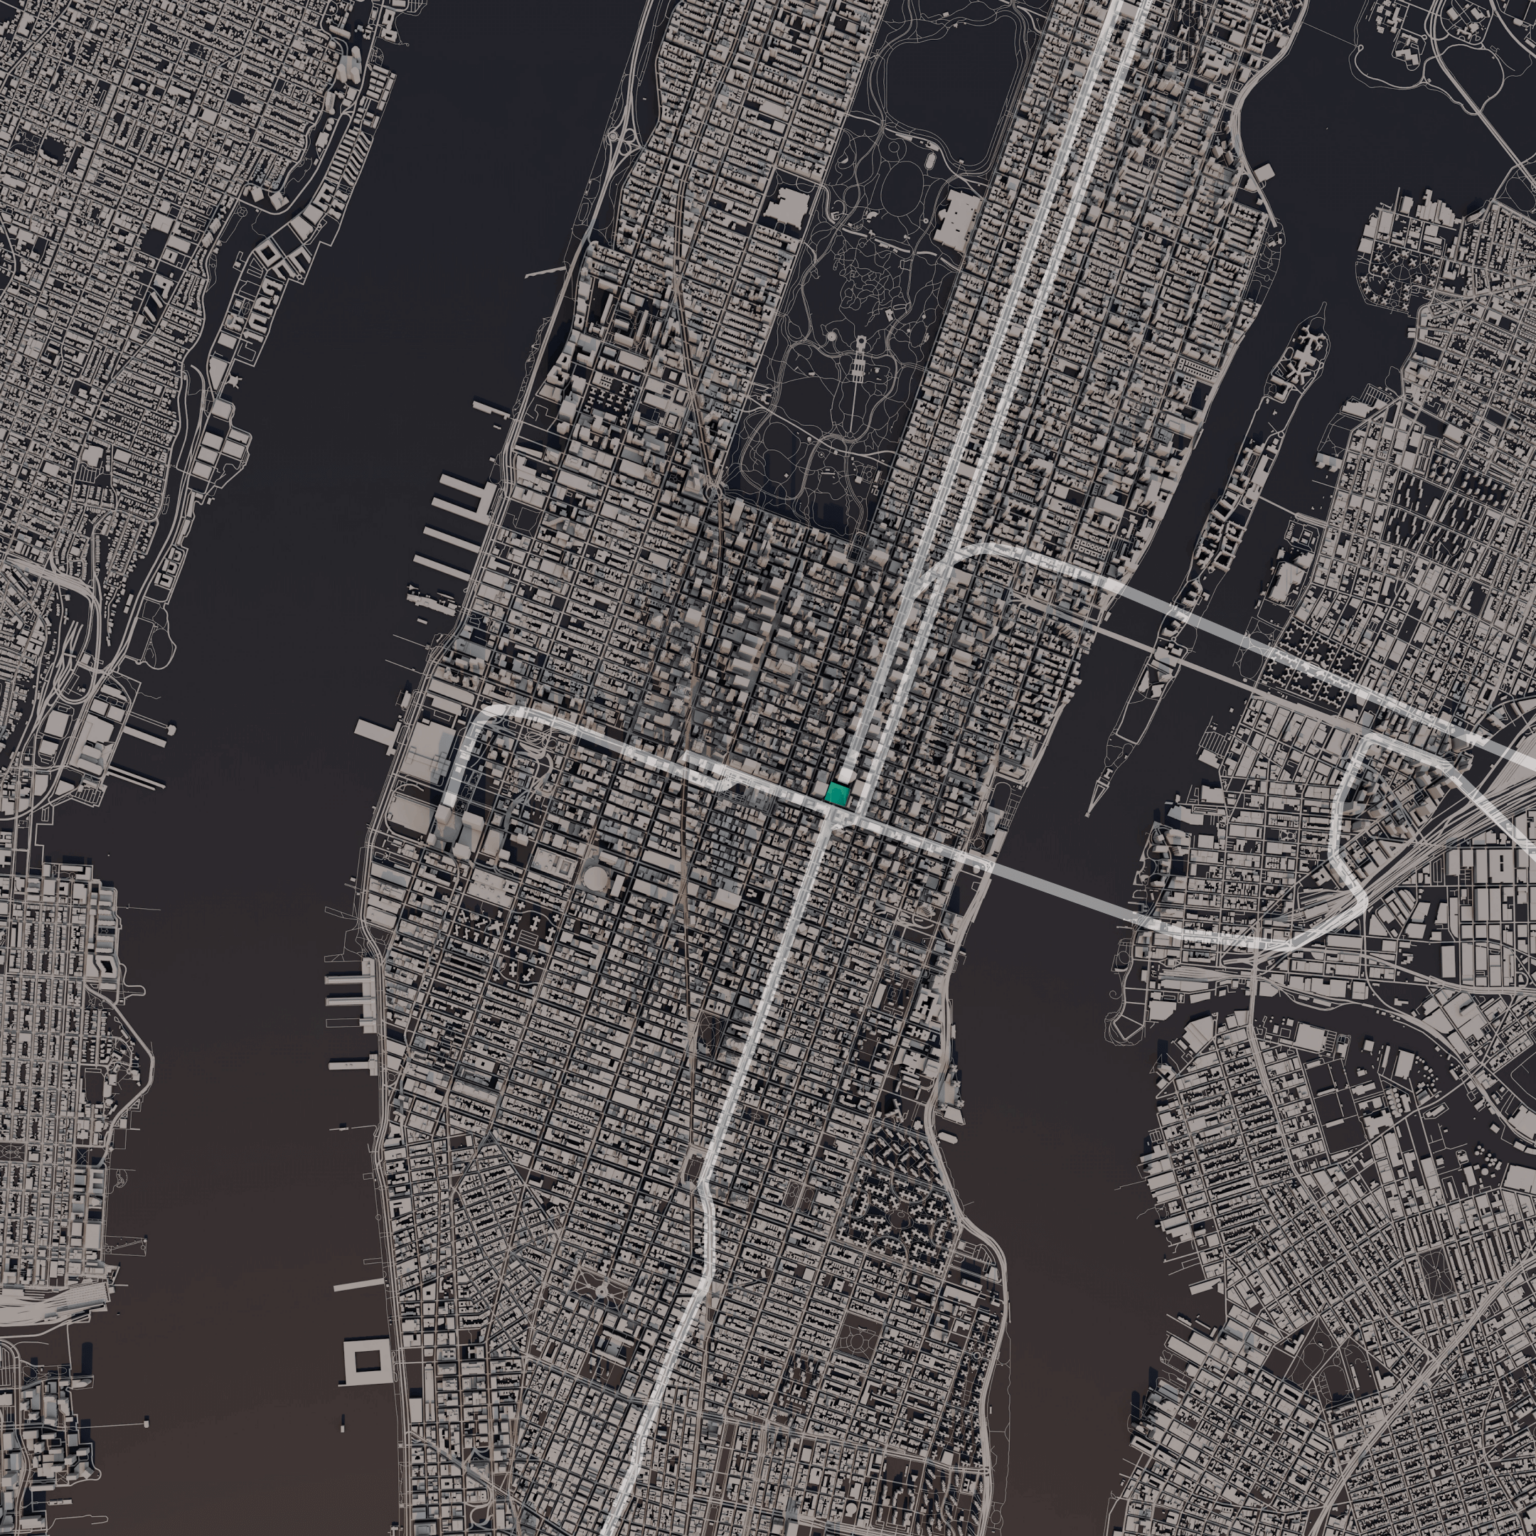 A satellite image of new york city.